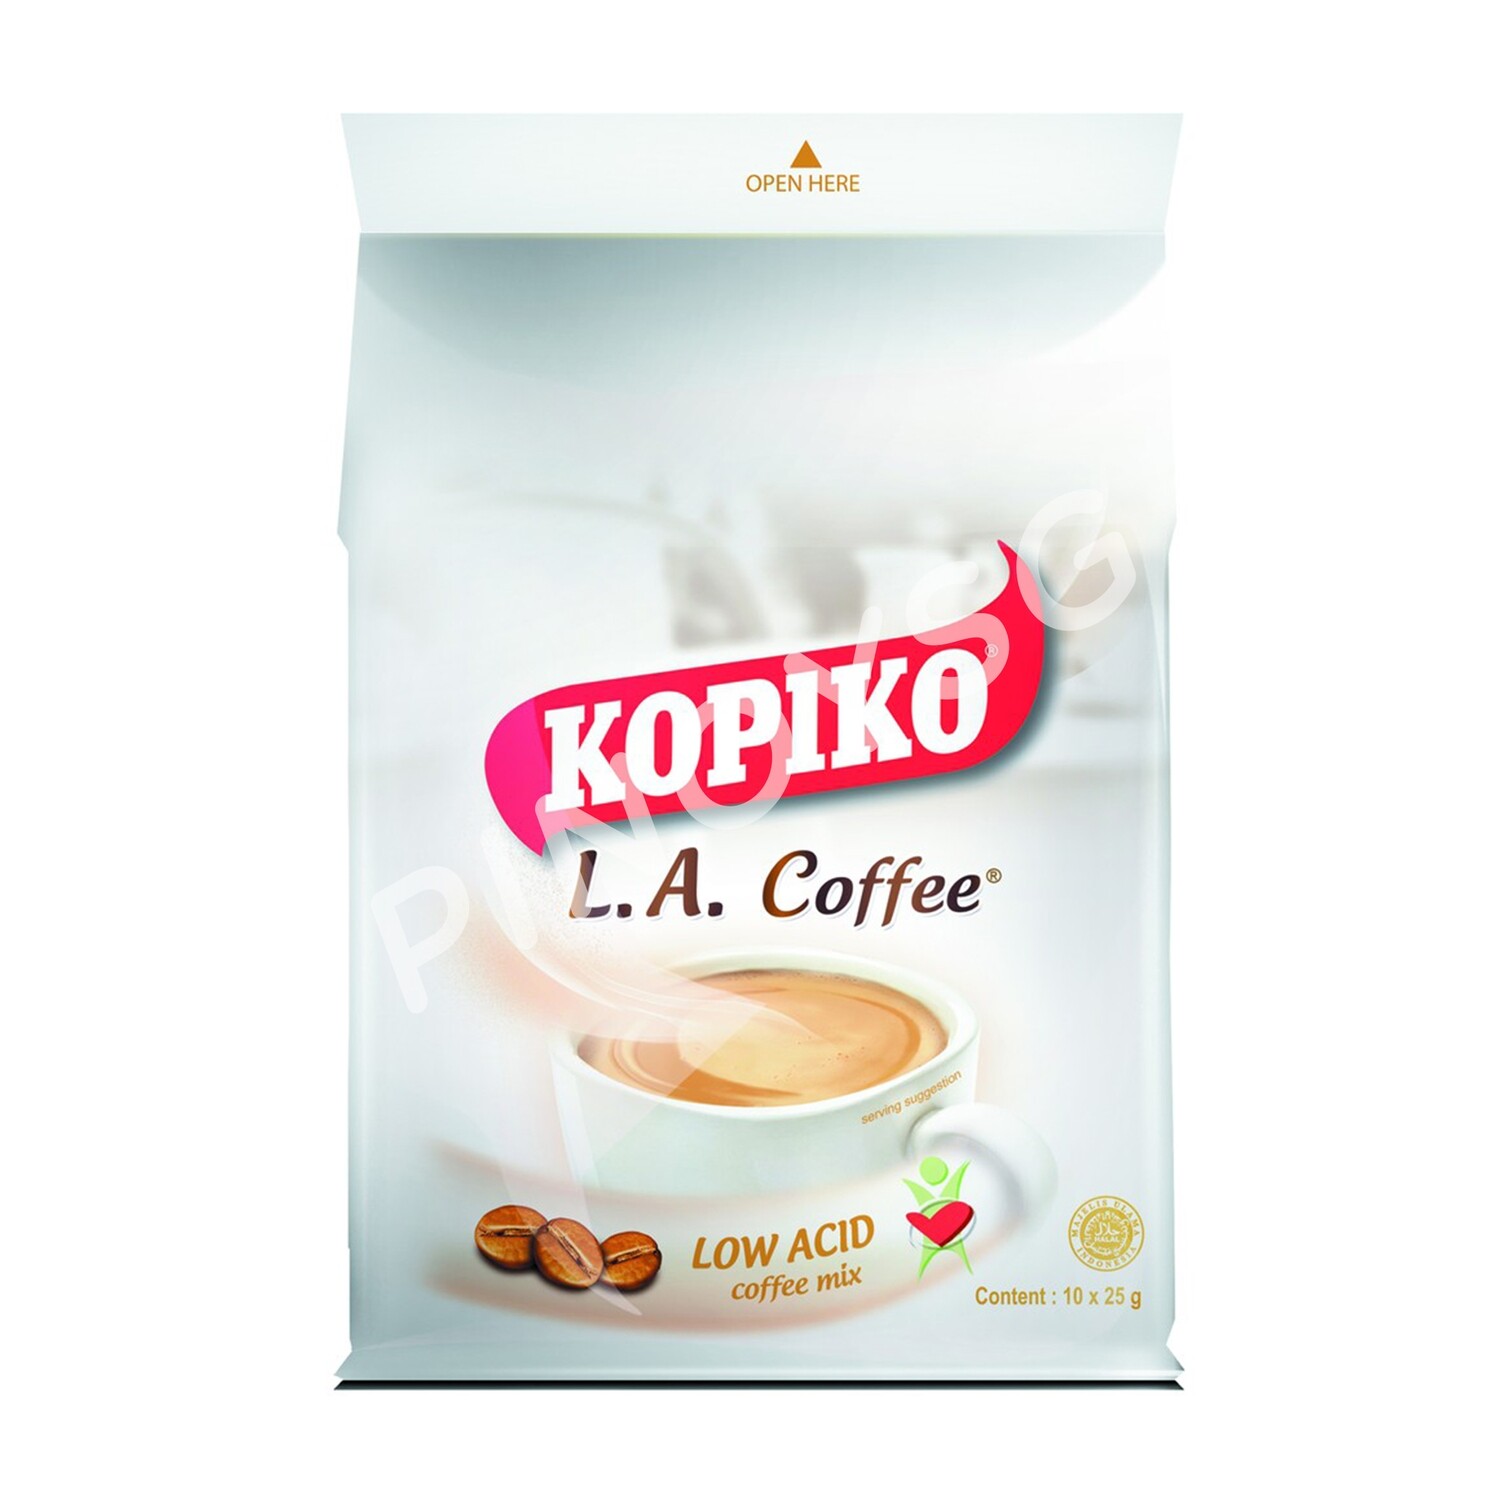 Kopiko L.A. Coffee 10 x 25g (Low Acid)